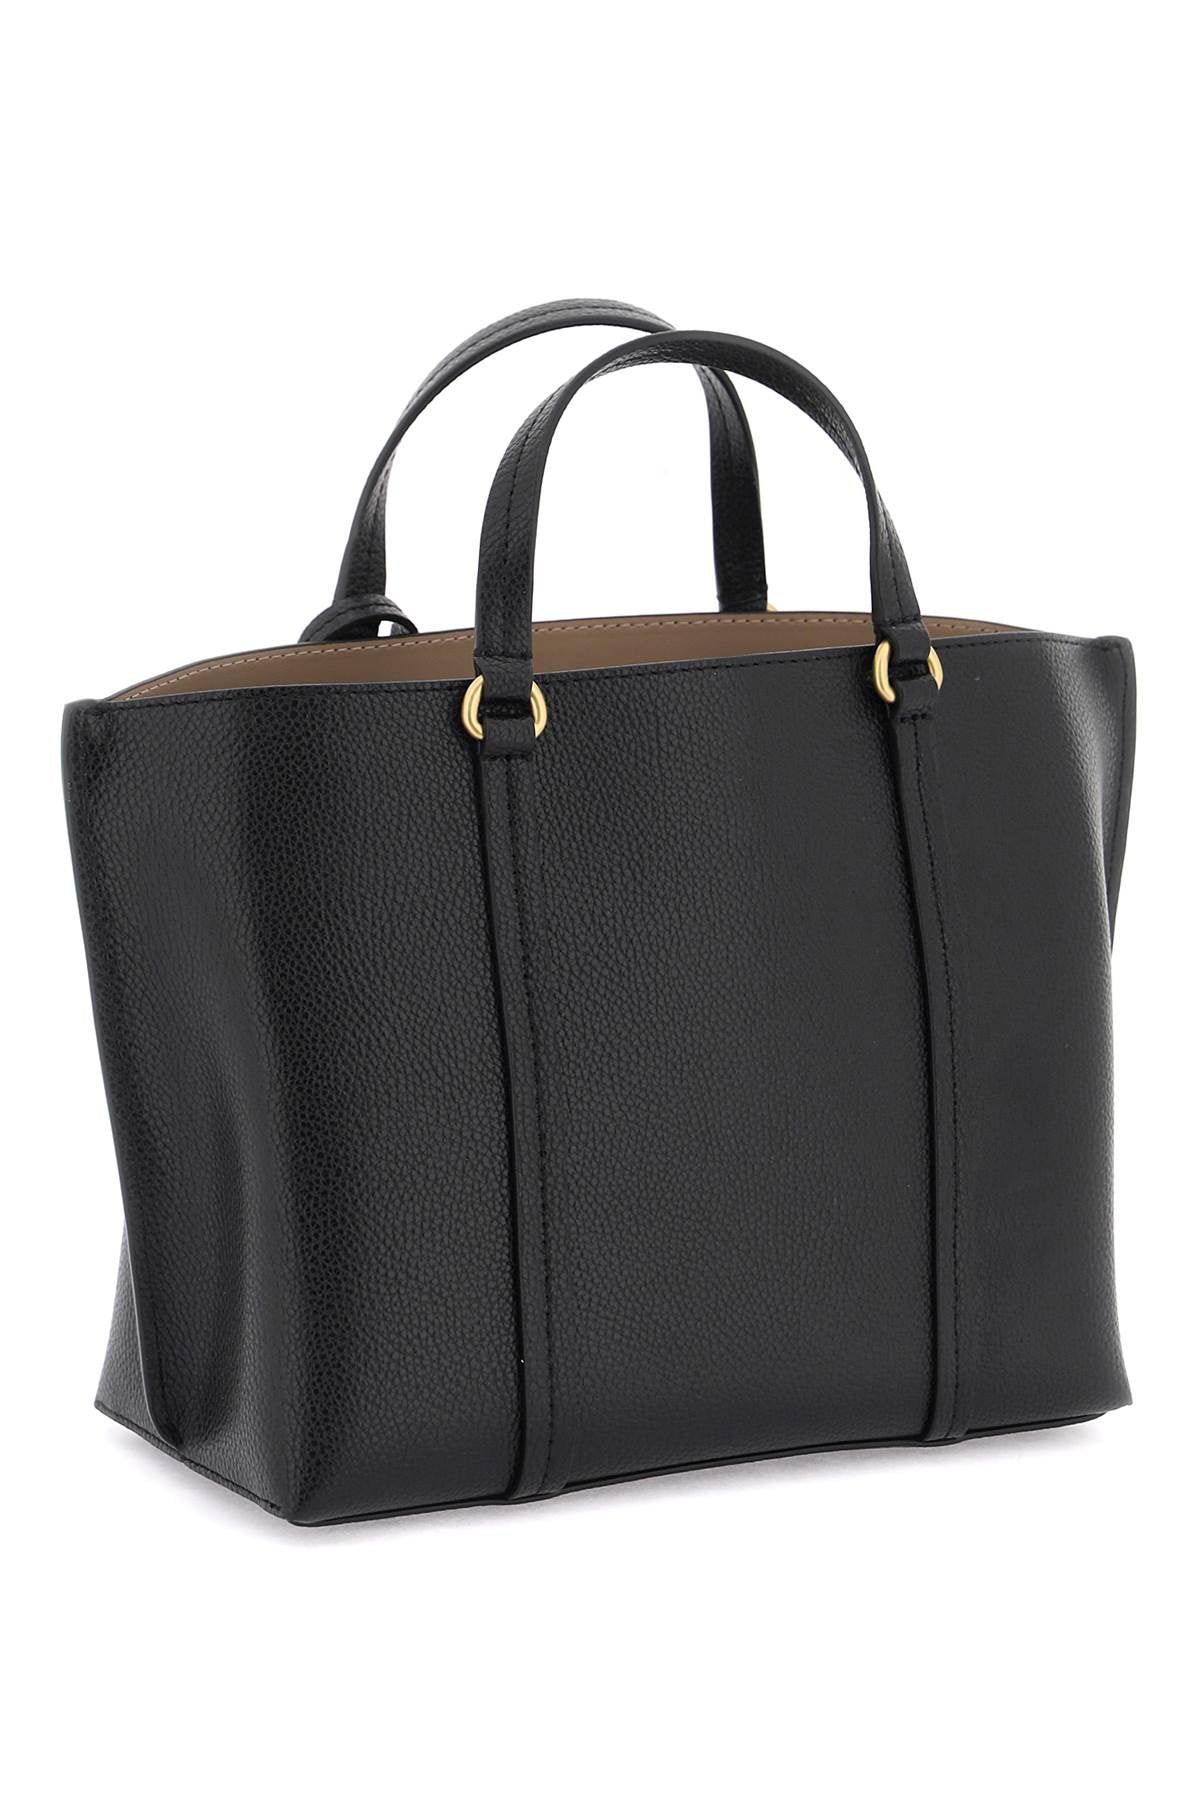 PINKO Women's Black Leather Shopper Handbag with Bird Charm and Adjustable Strap